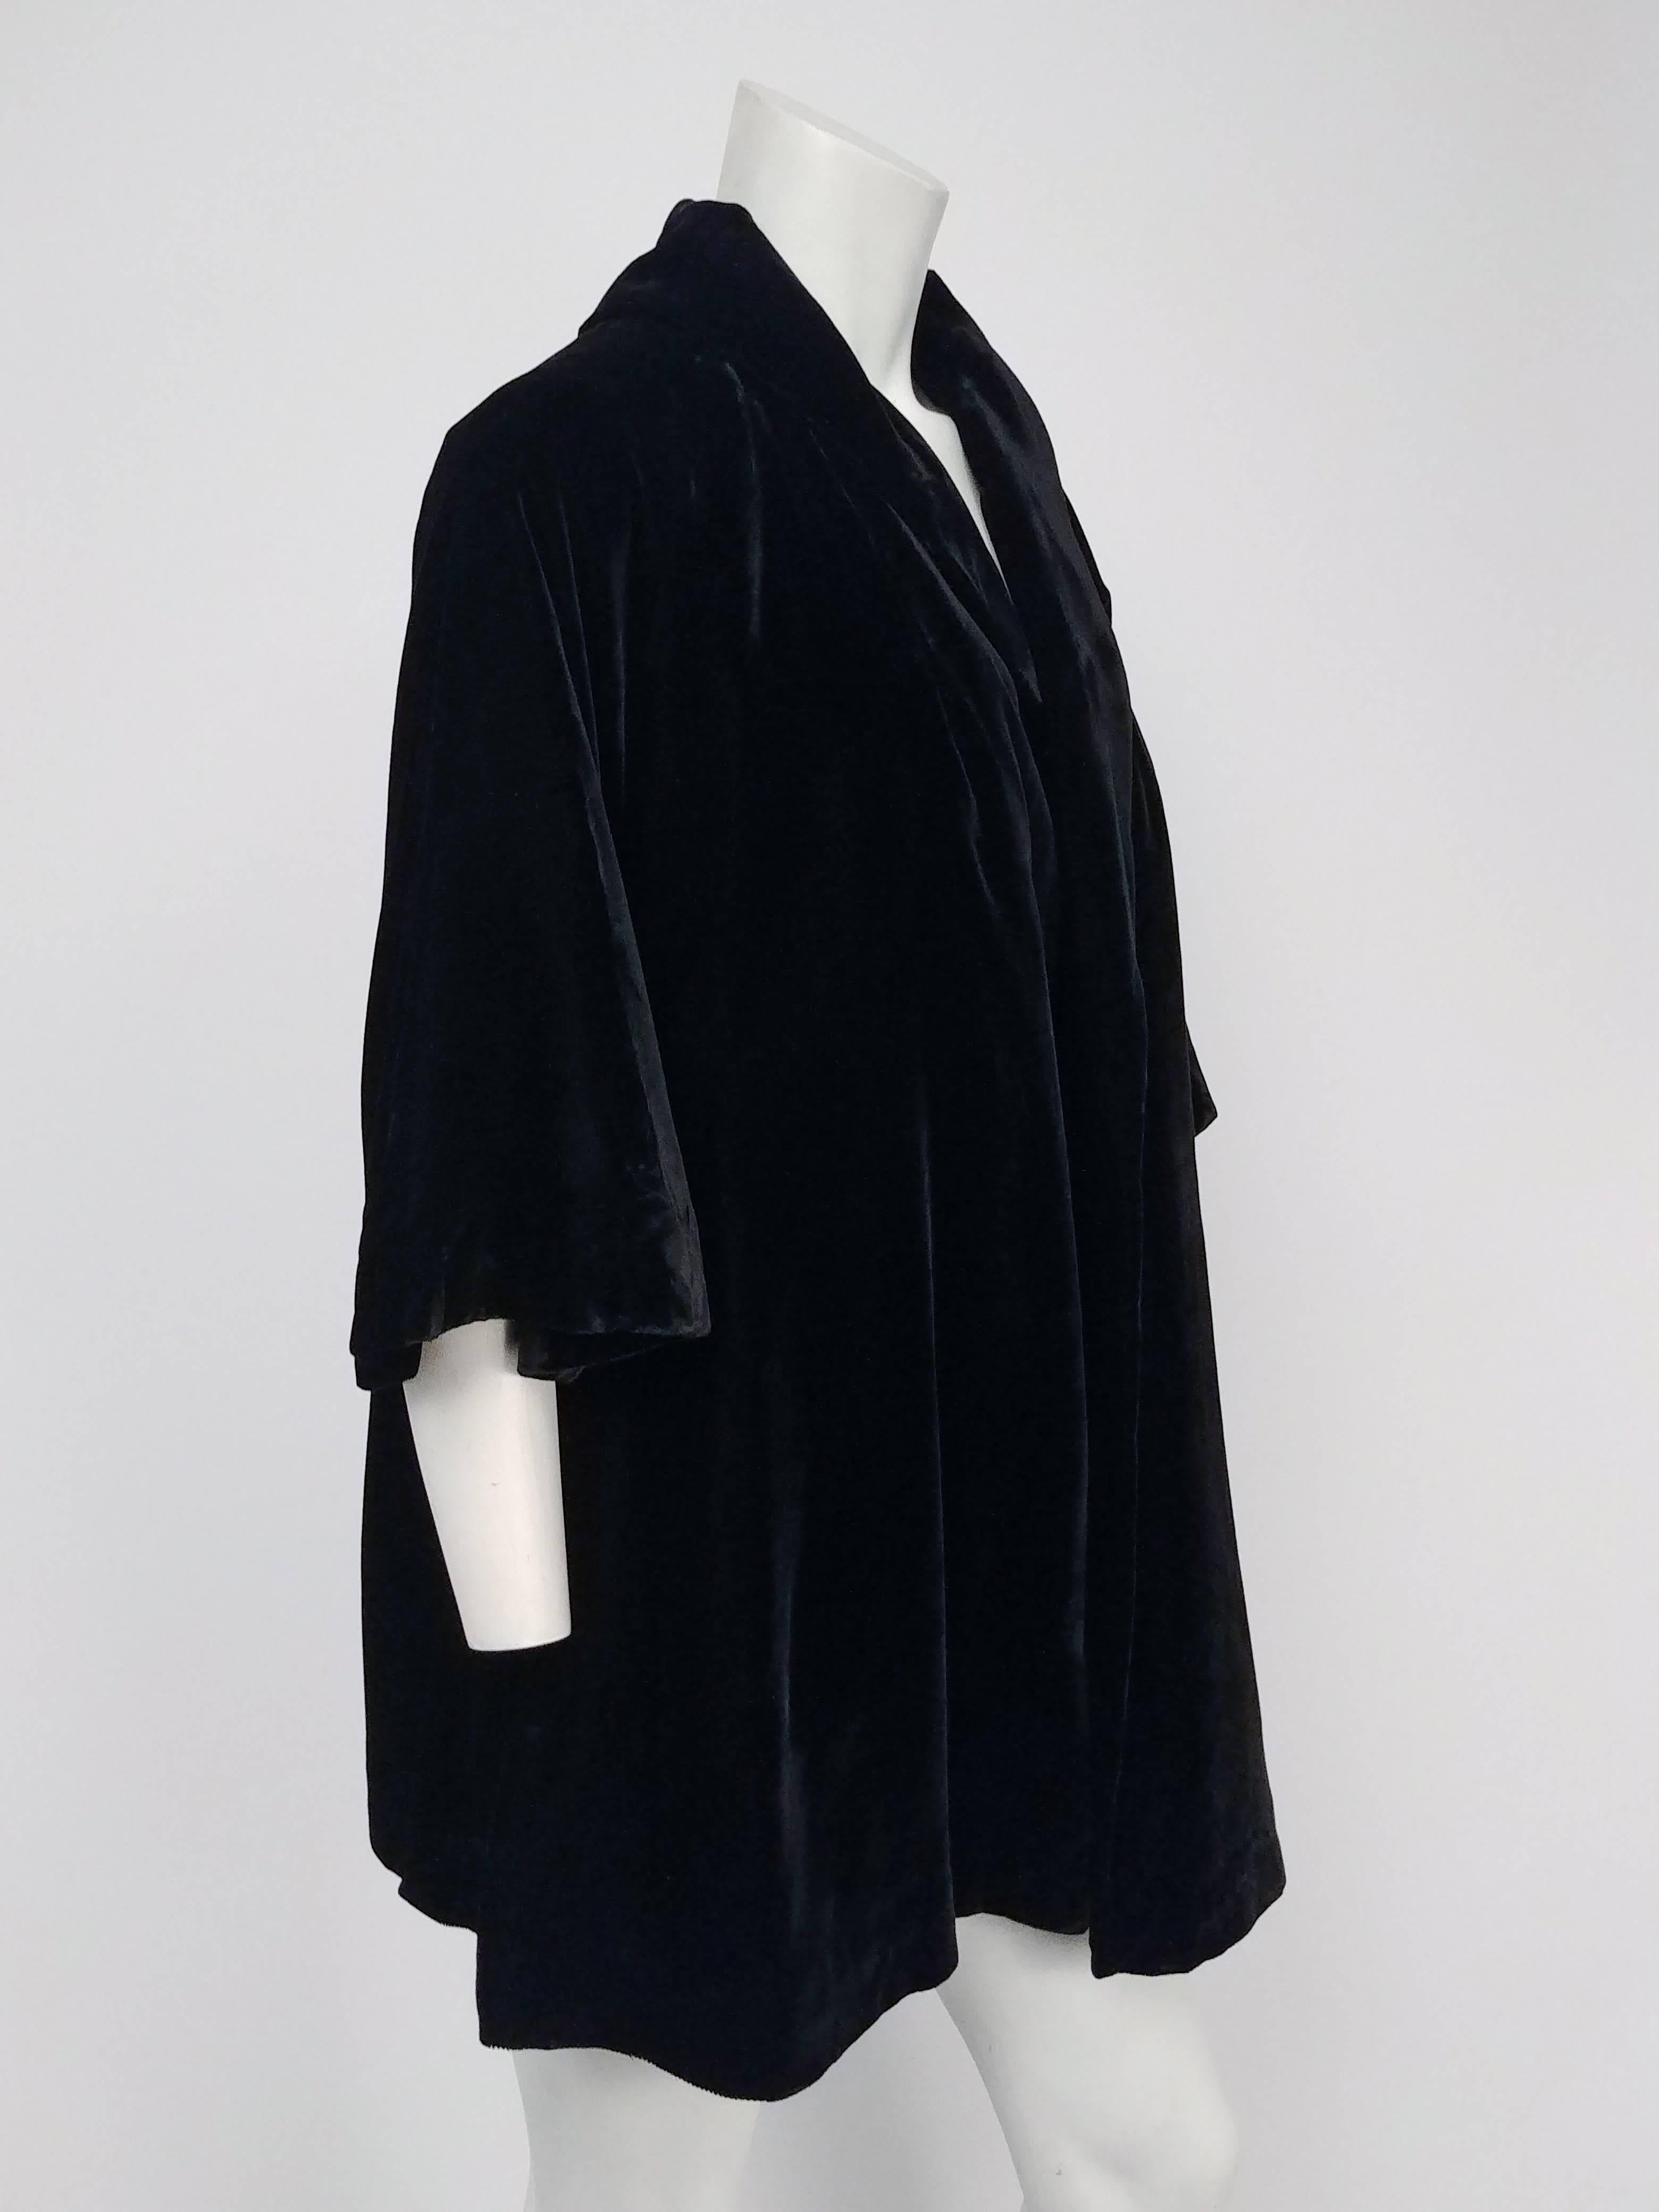 Lilli Diamond Black Velvet Jacket, 1950s. Evening velvet jacket, no front closures, wide flared sleeves.